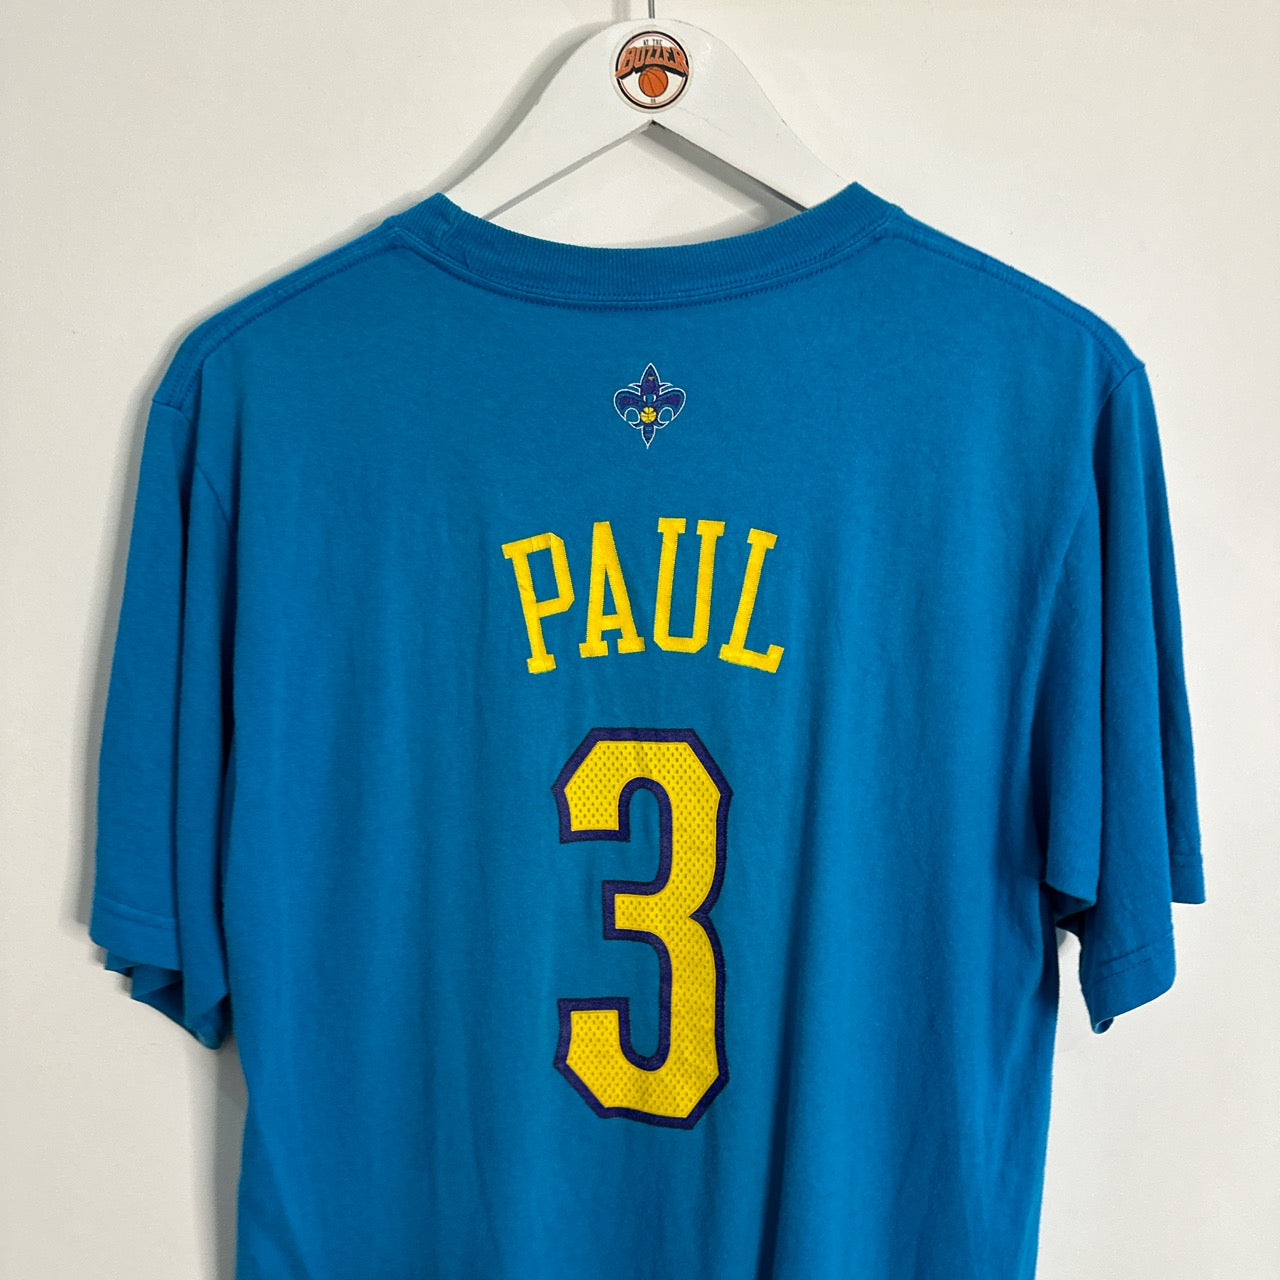 New Orleans Hornets Chris Paul Adidas T shirt - Small